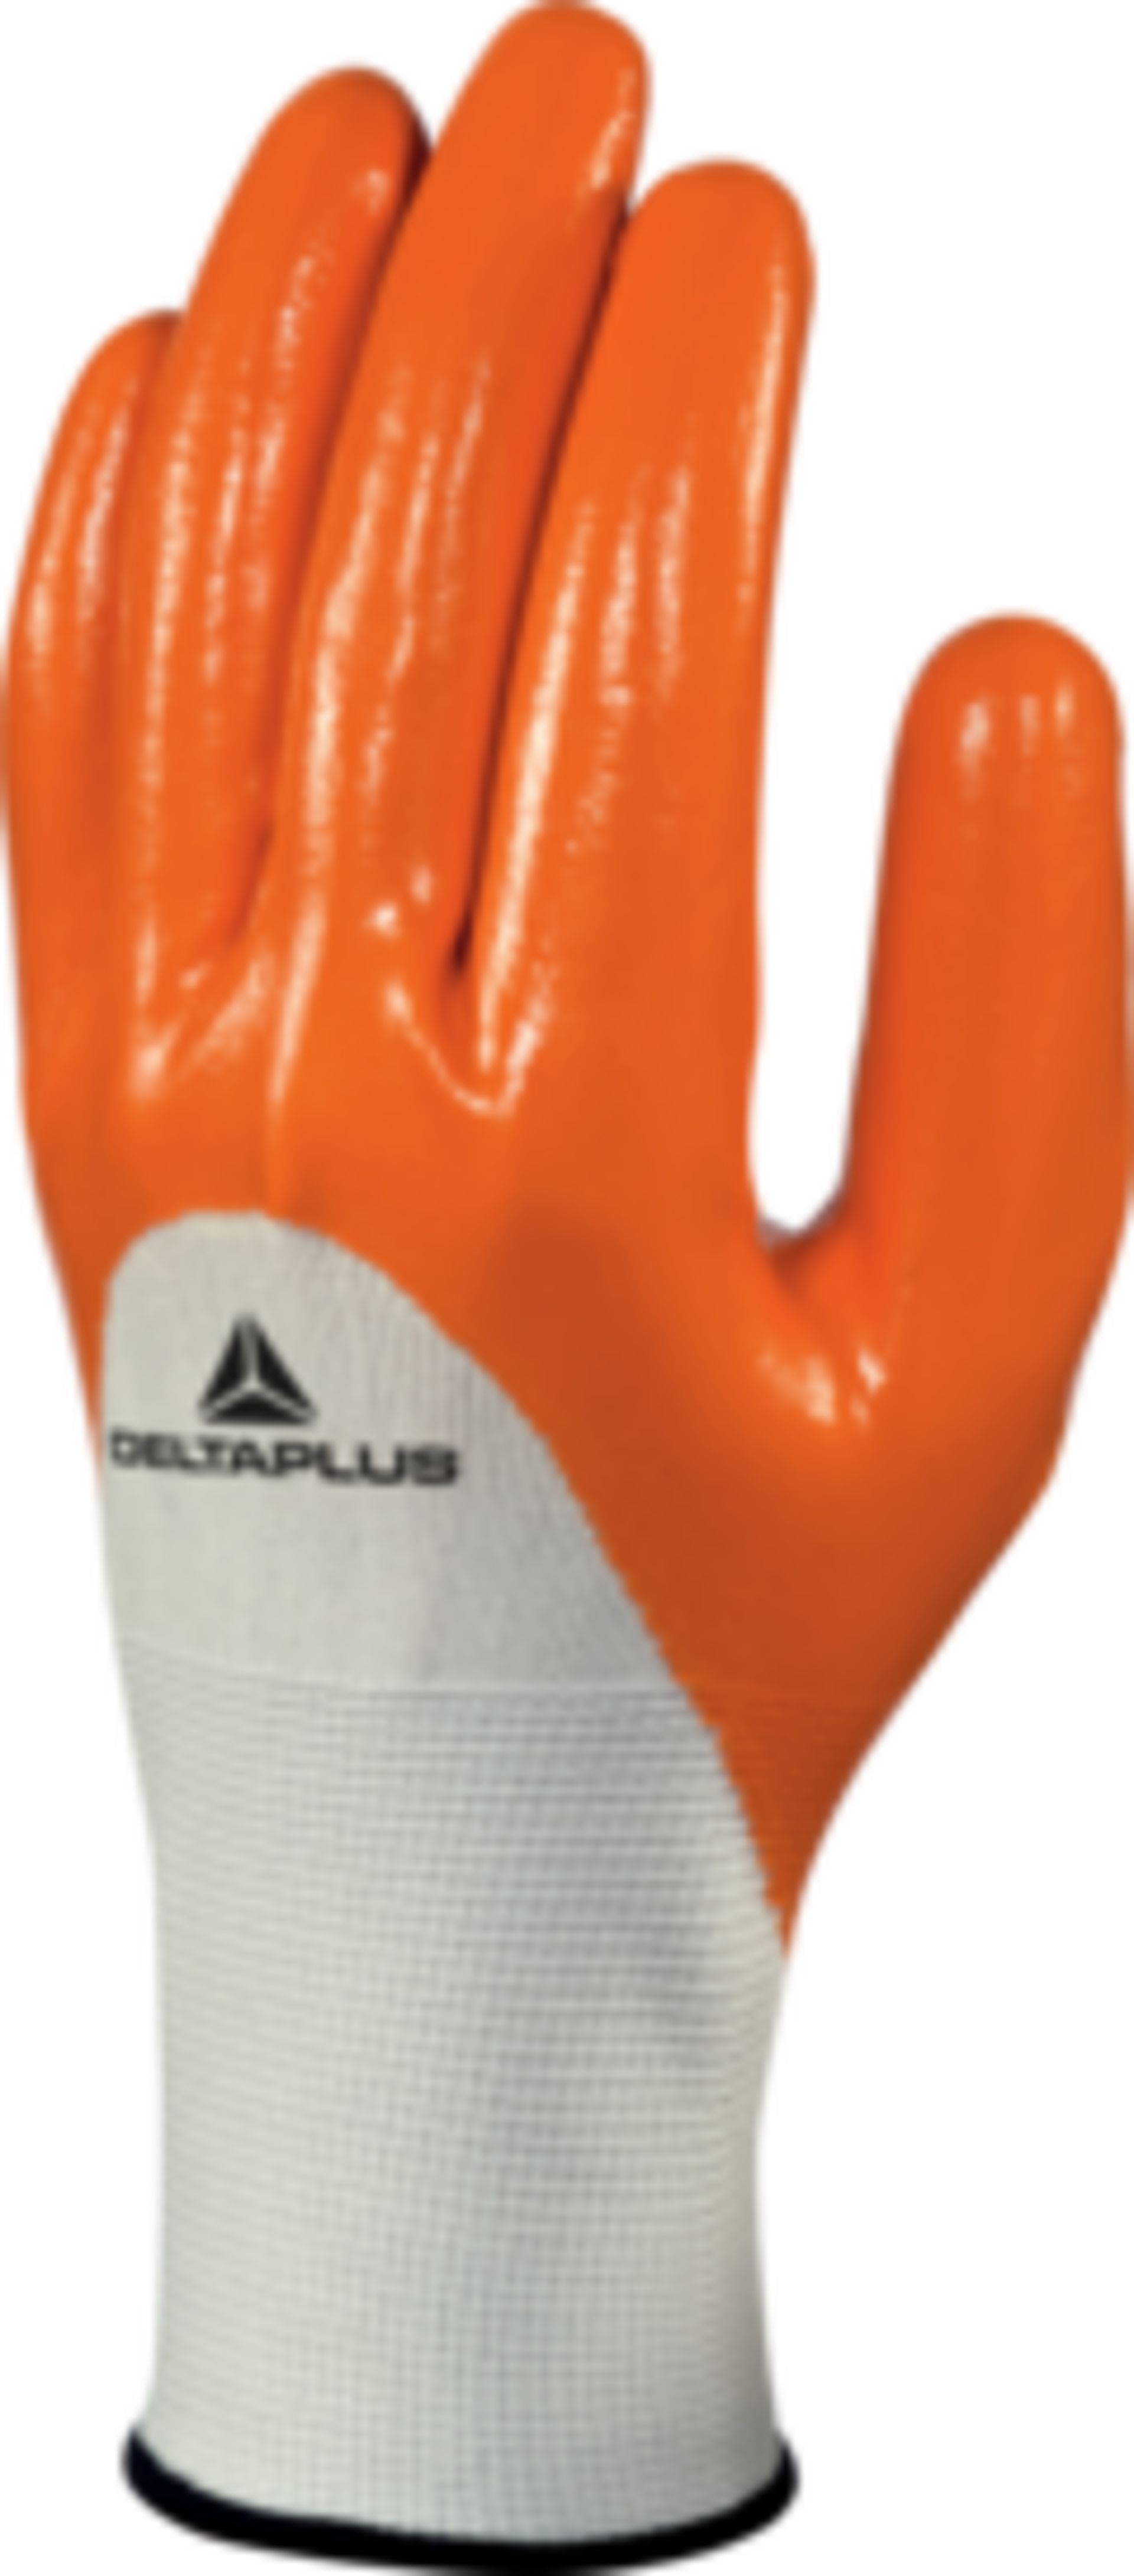 DeltaPlus DPVE715 nitril blistr Rukavice povrstvené oranžová  9